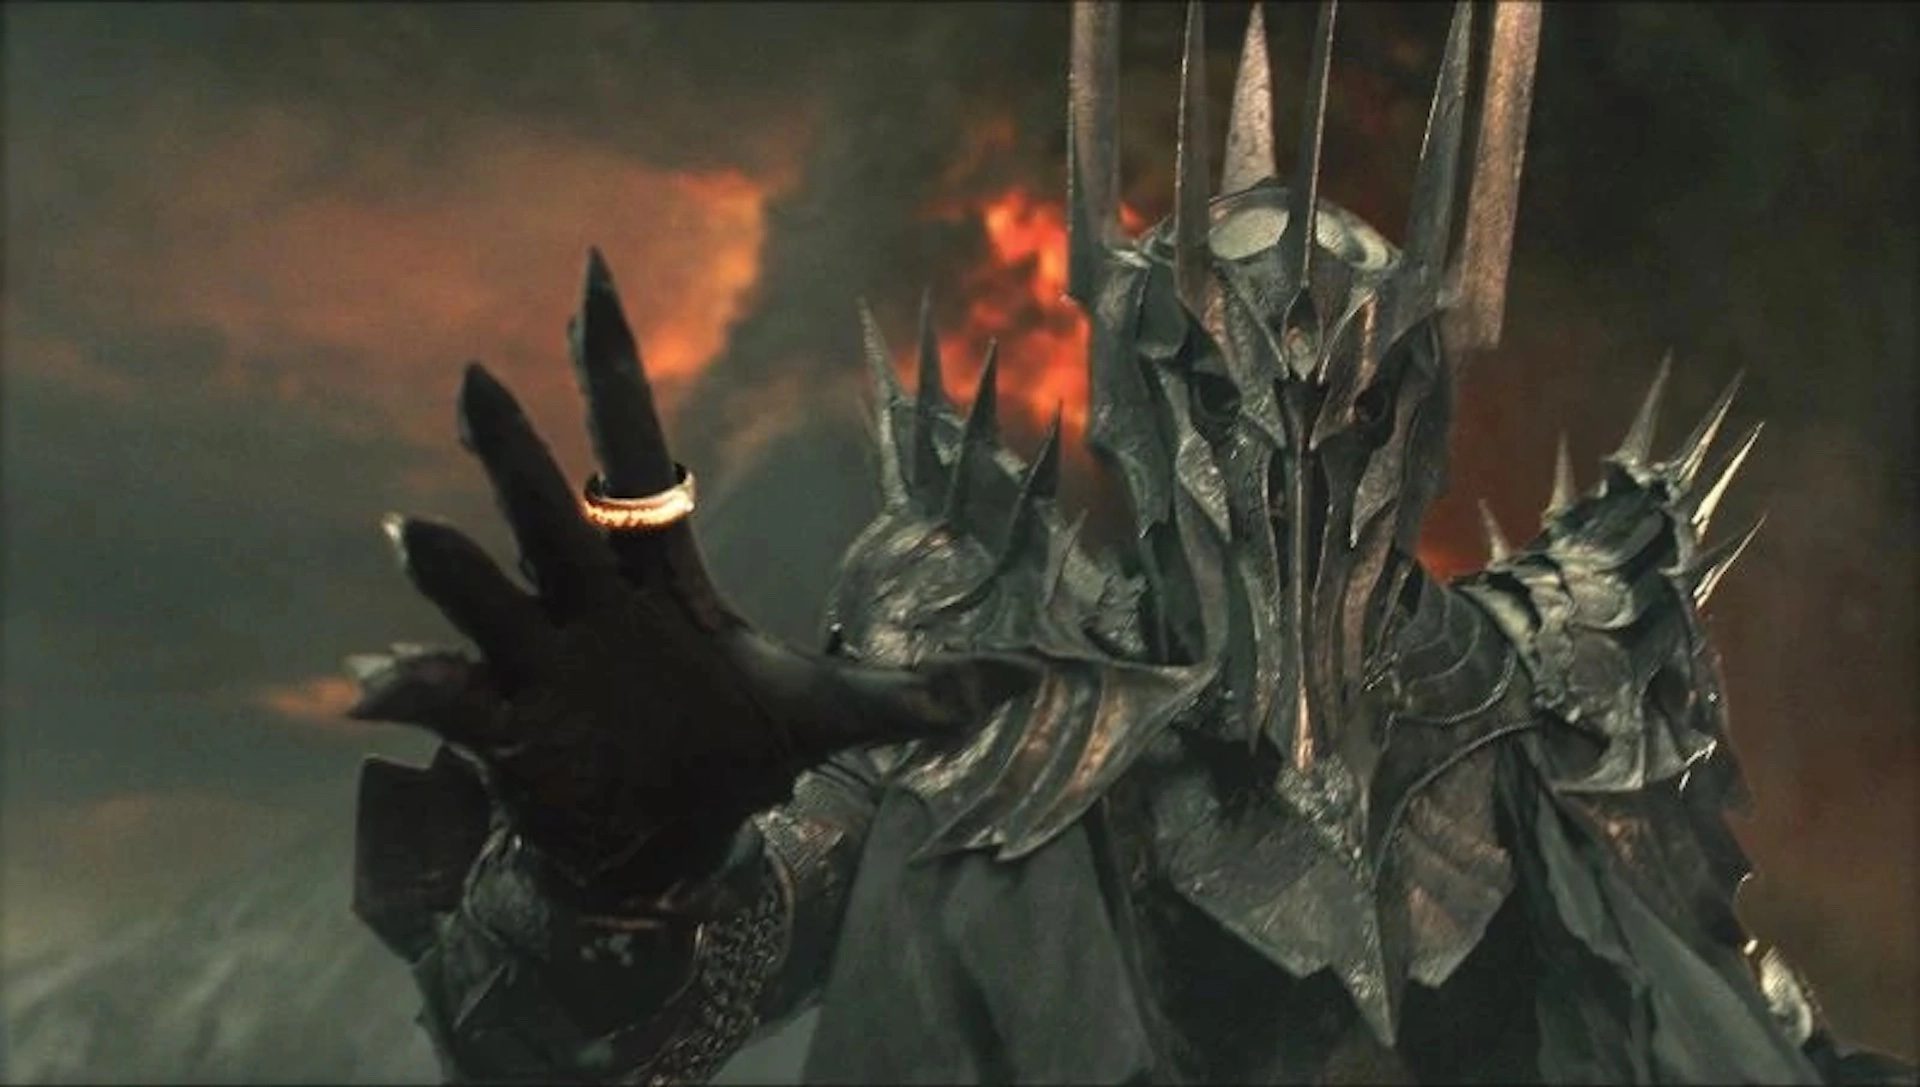 Sauron © New Line Cinema, WingNut Films